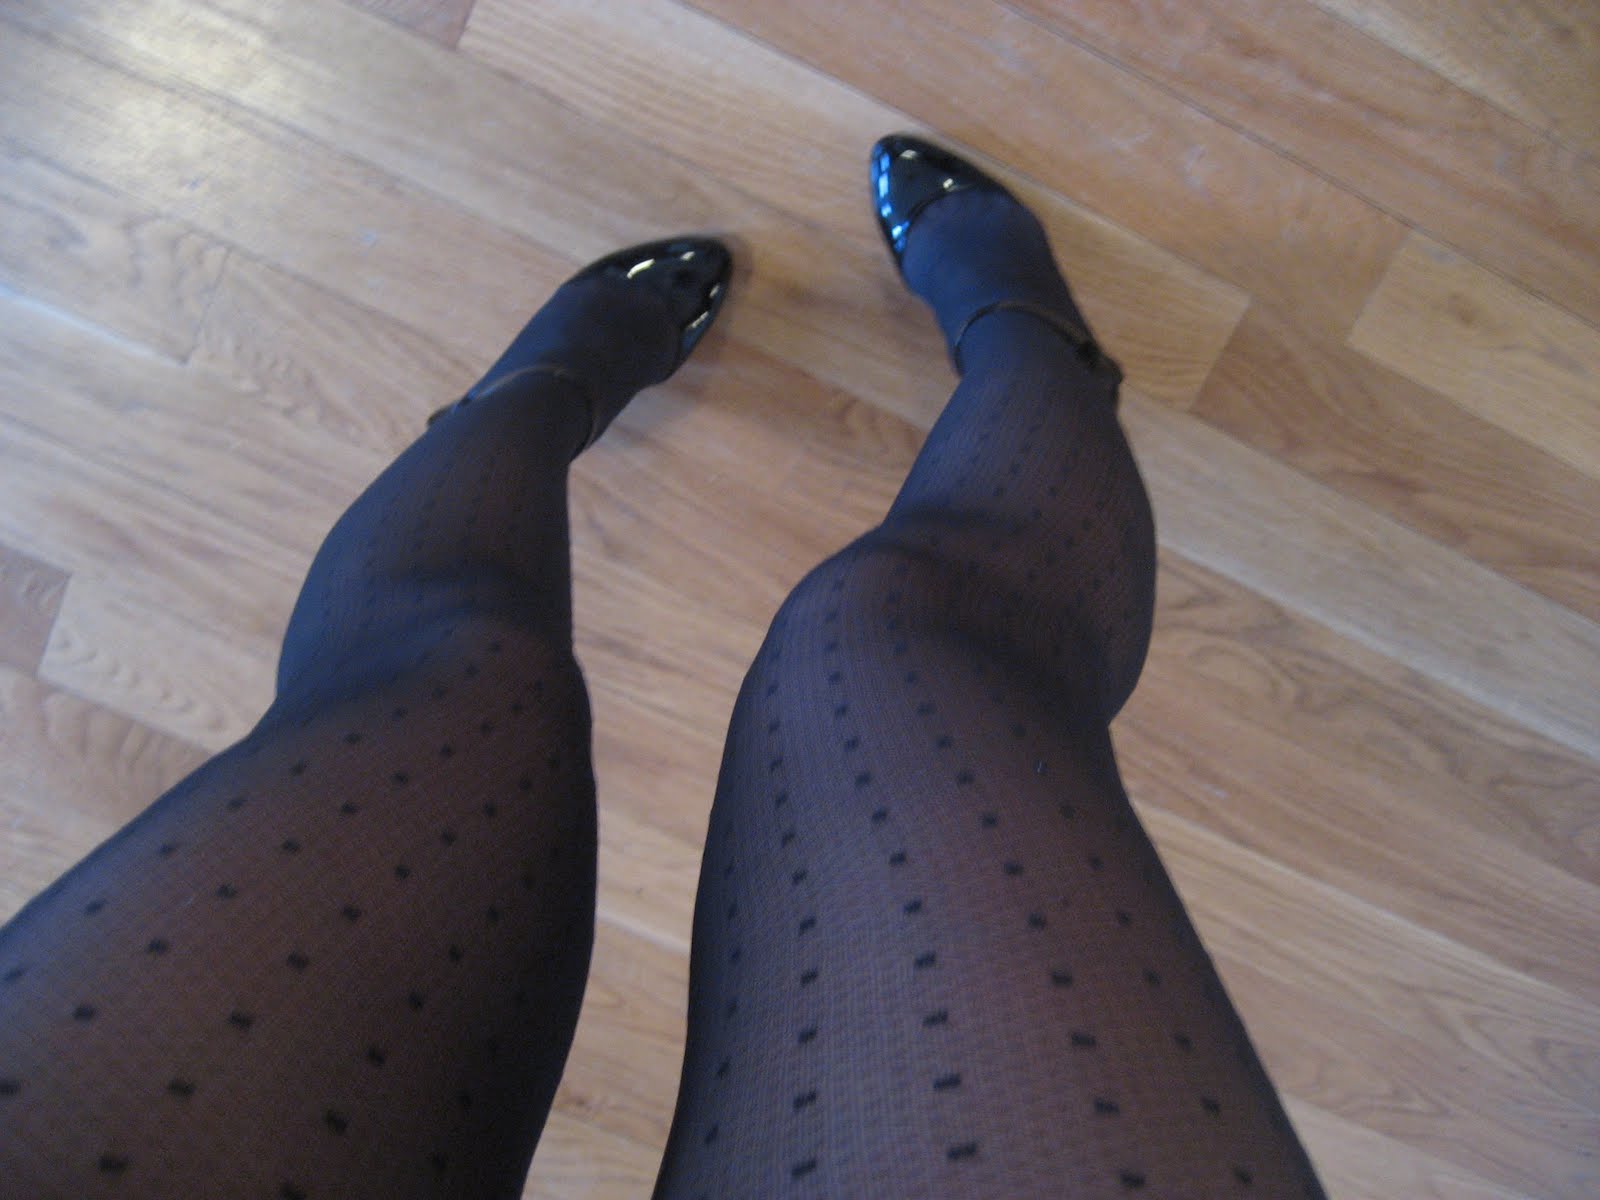 louboutin heels: Me in Vampana Heels and Wolford Swiss Dot Pantyhose